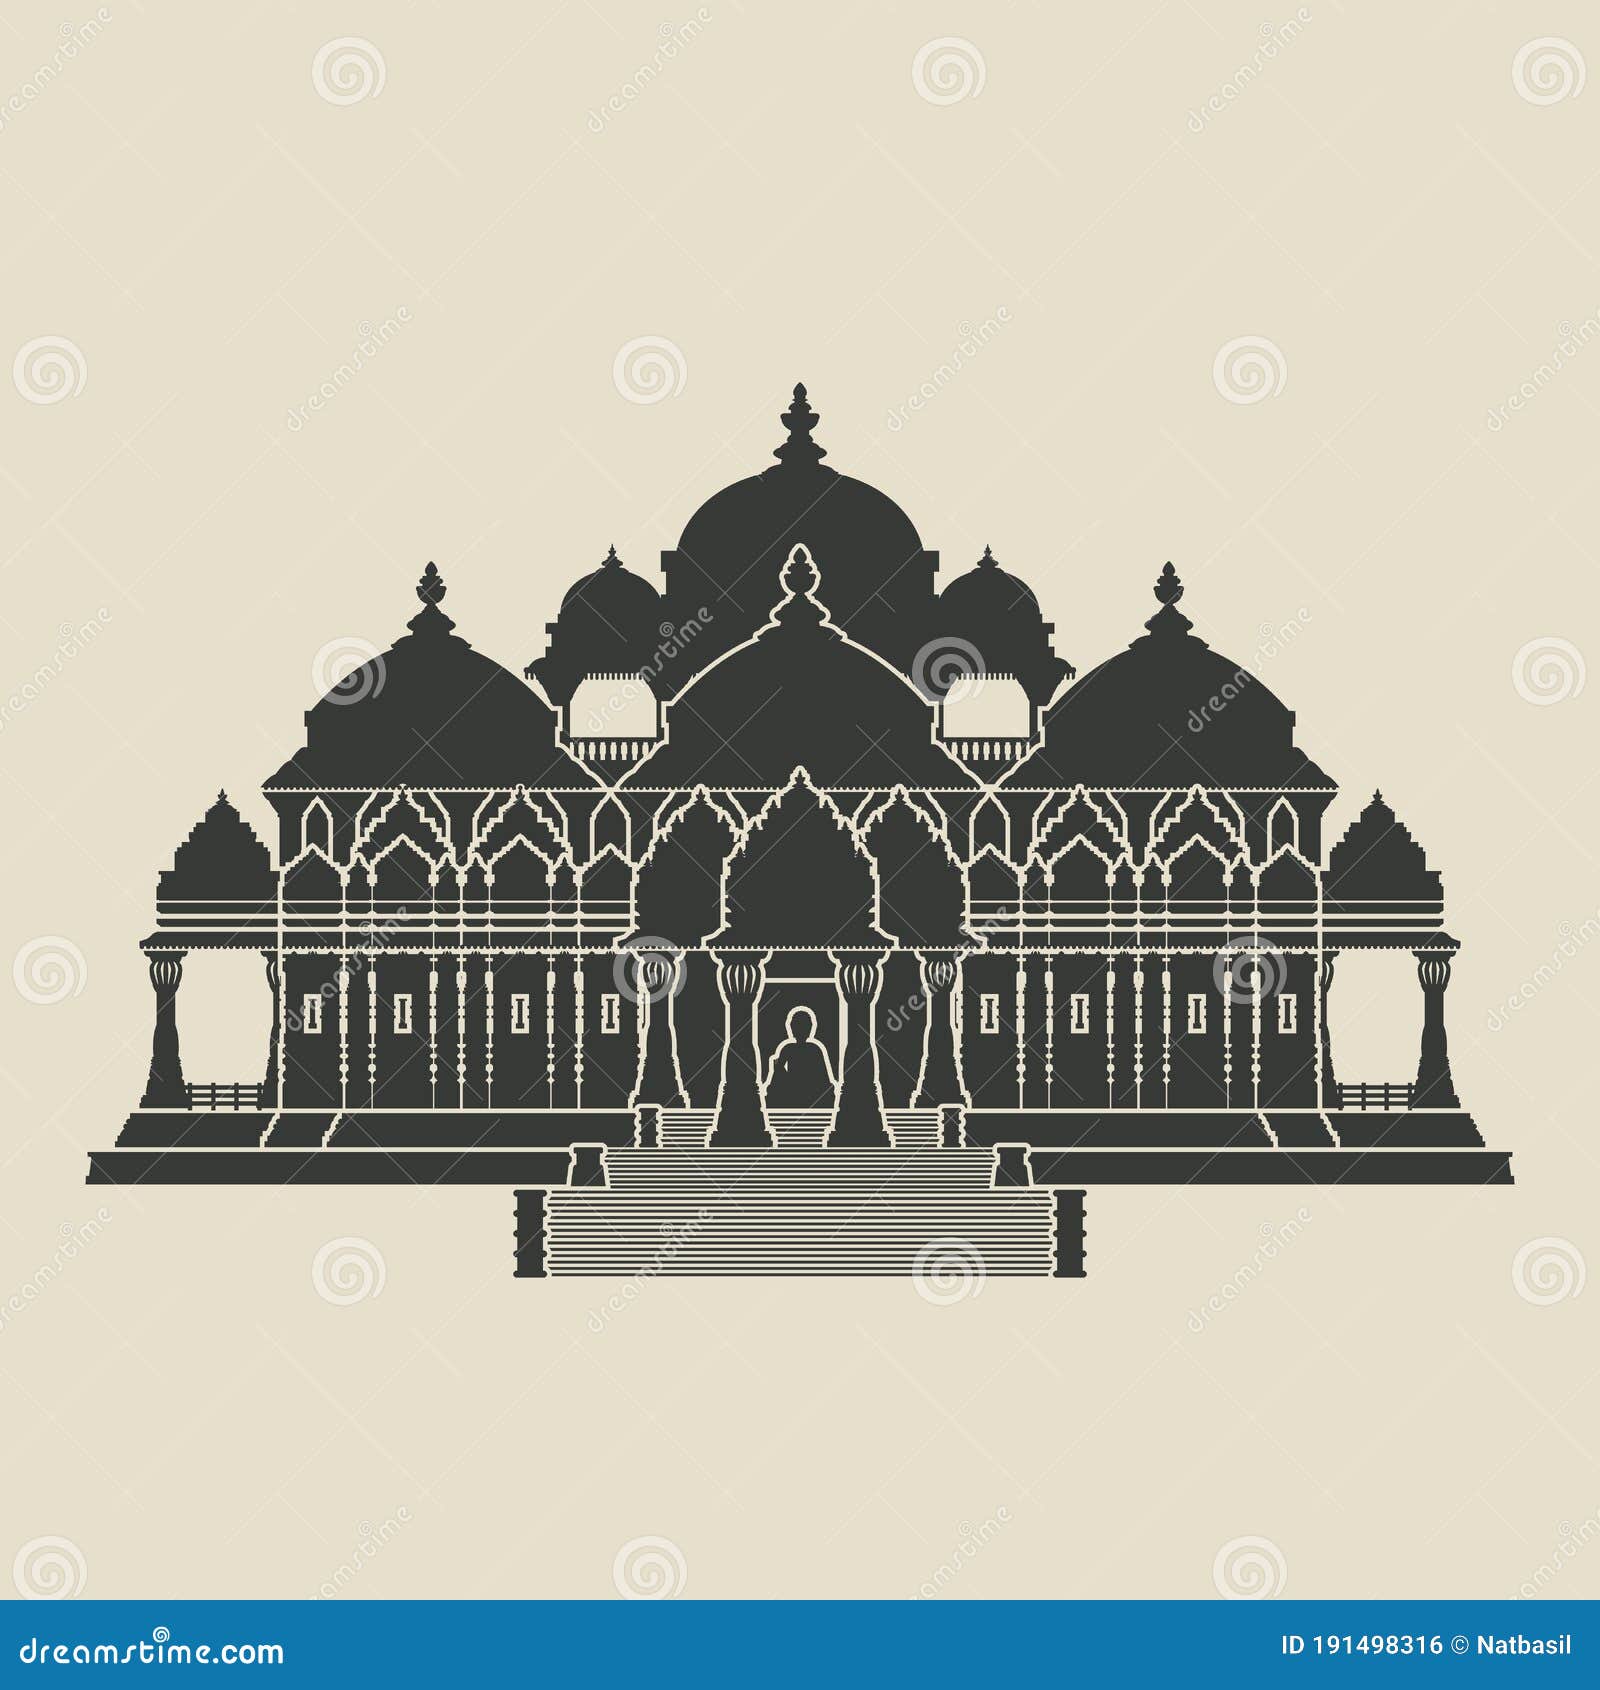 swaminarayan akshardham hindu temple black silhouette